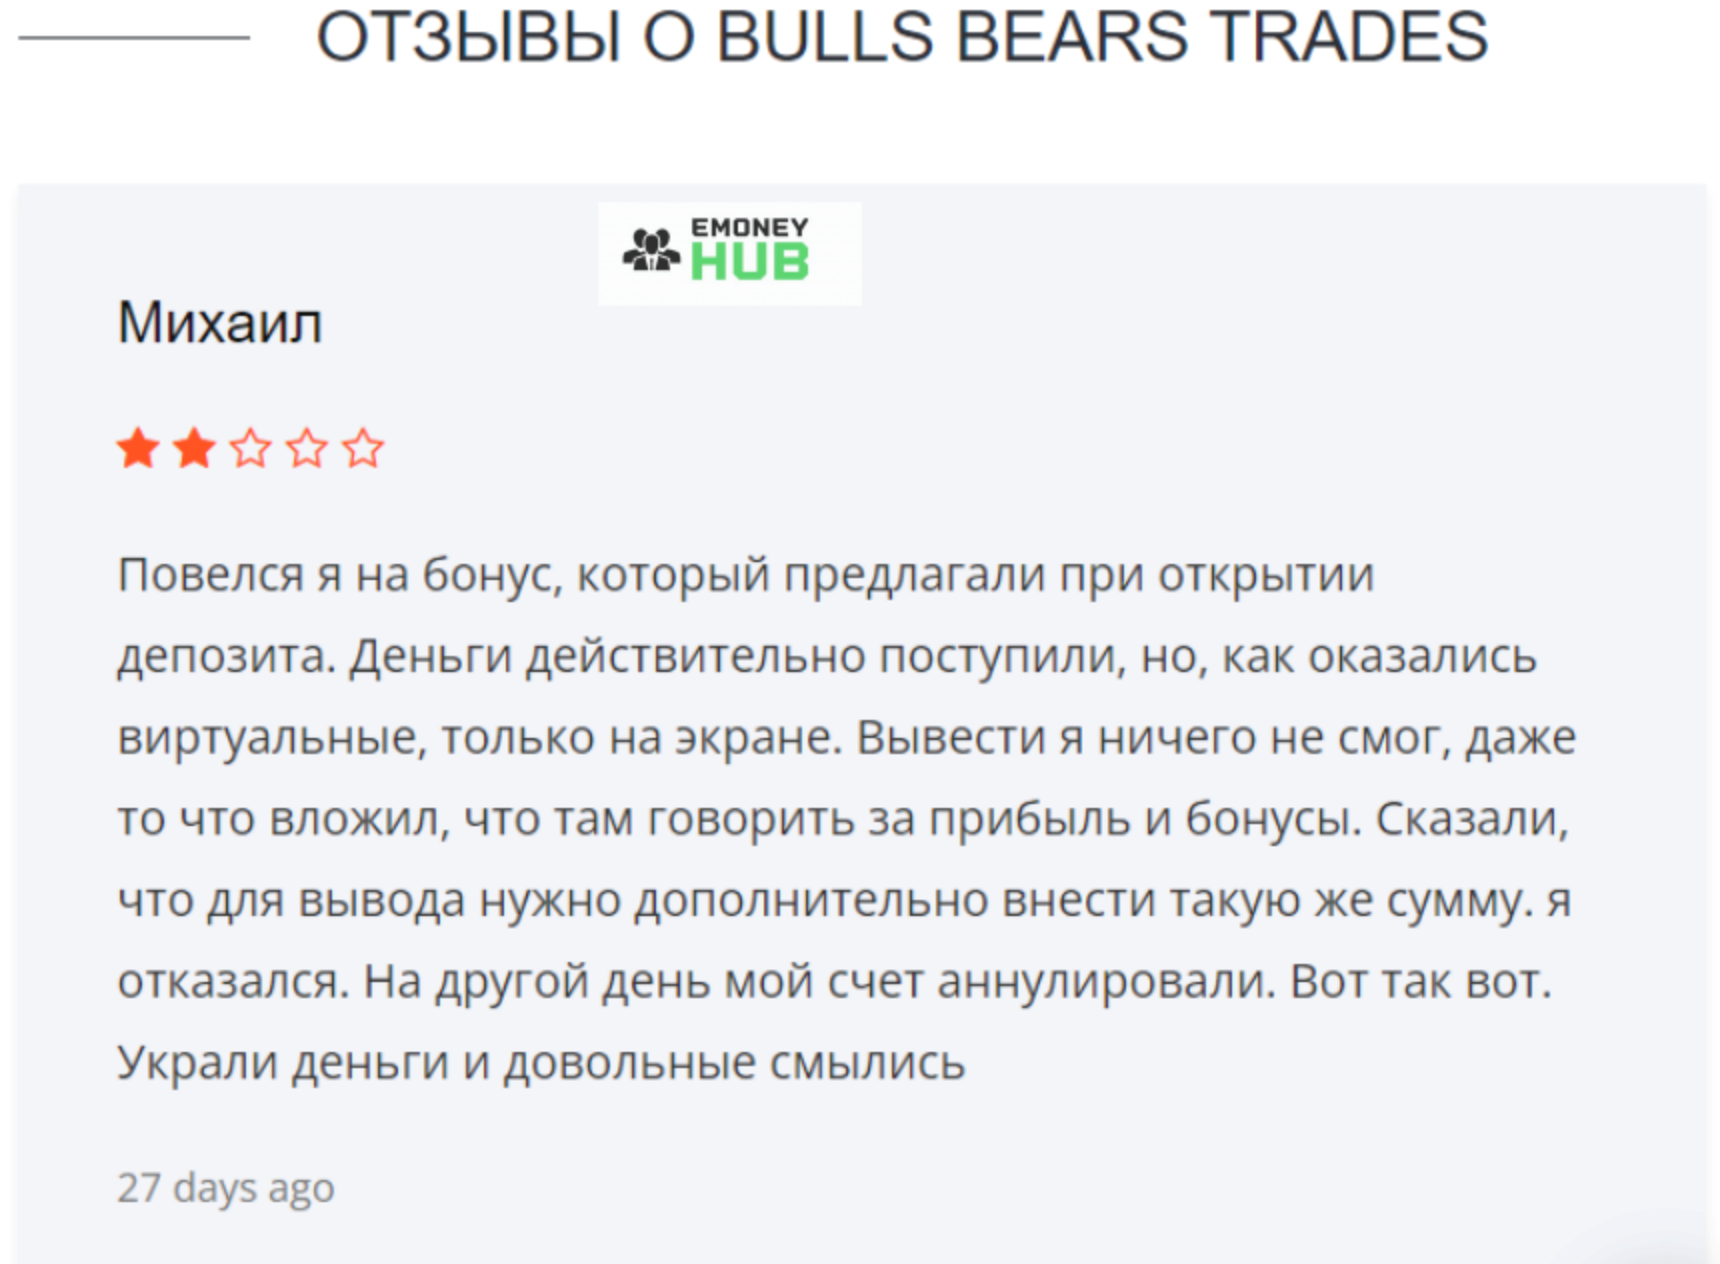 Bulls and Bears Trades Отзывы